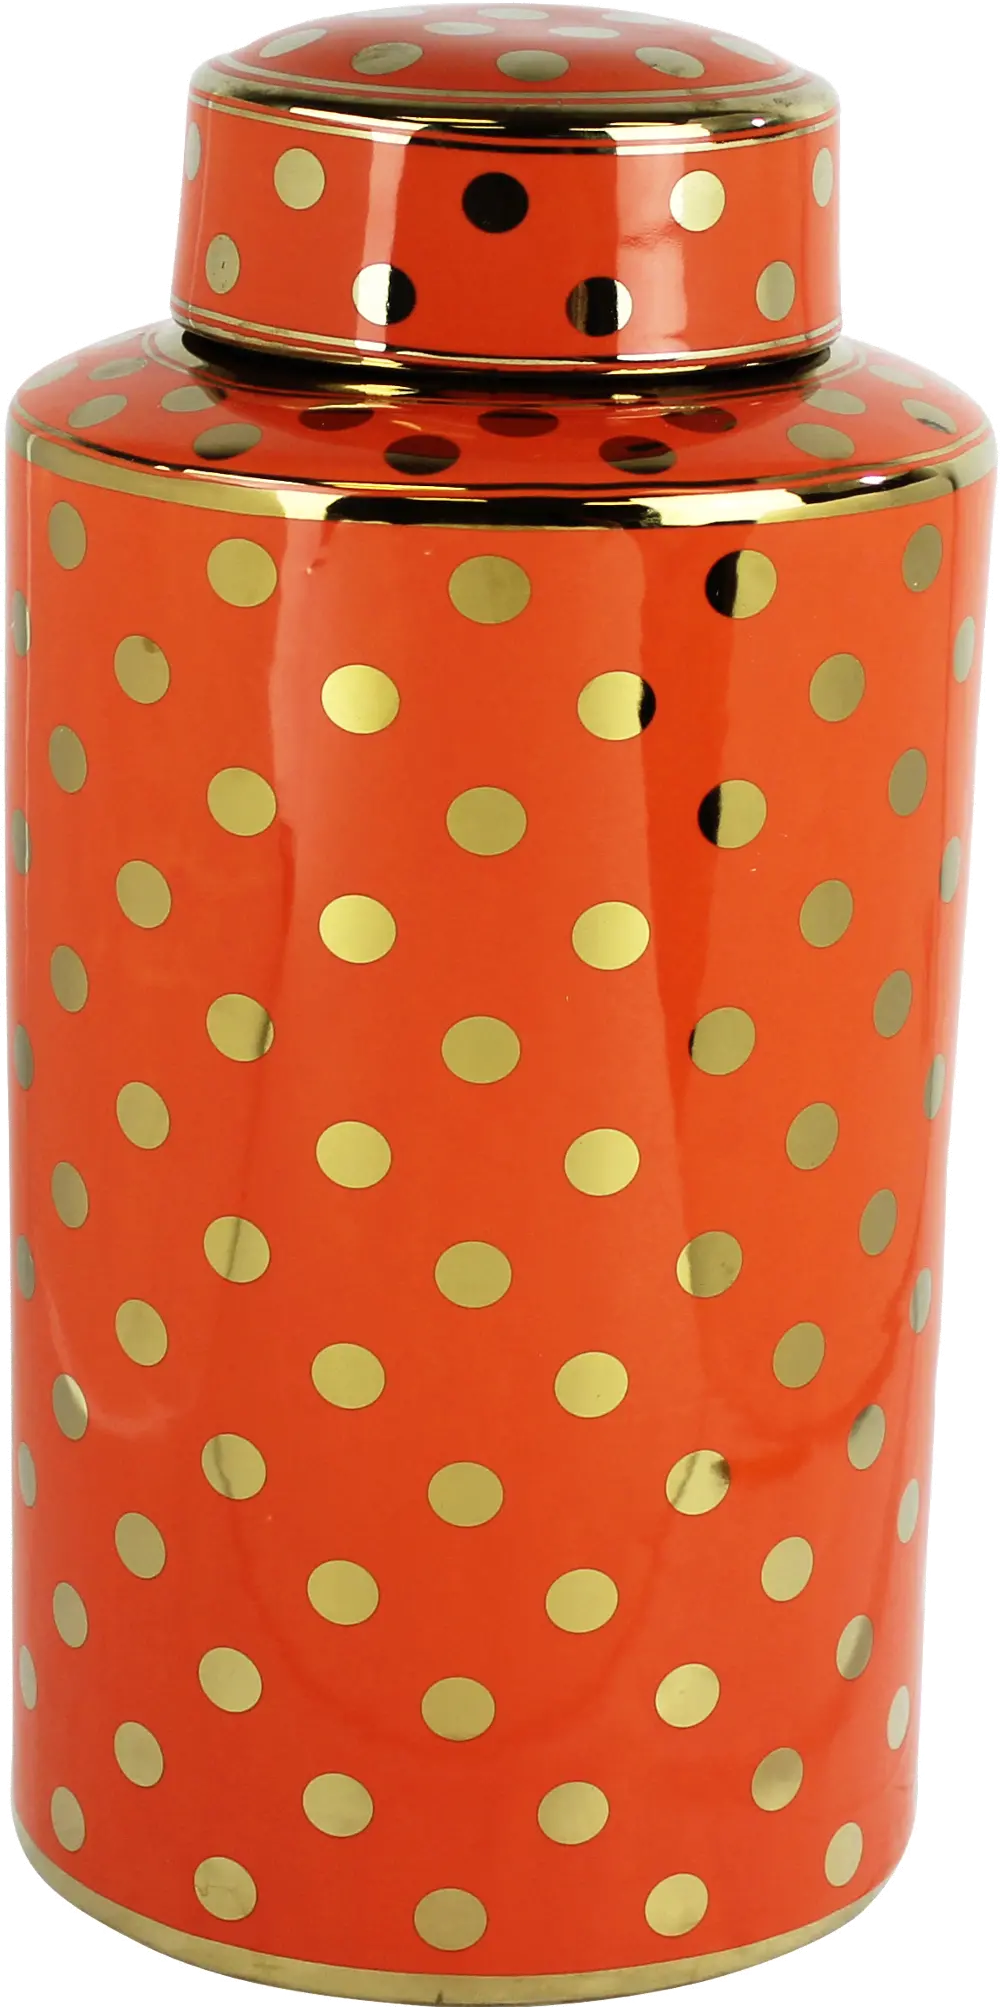 Orange Ceramic Lidded Jar with Gold Polka Dots-1